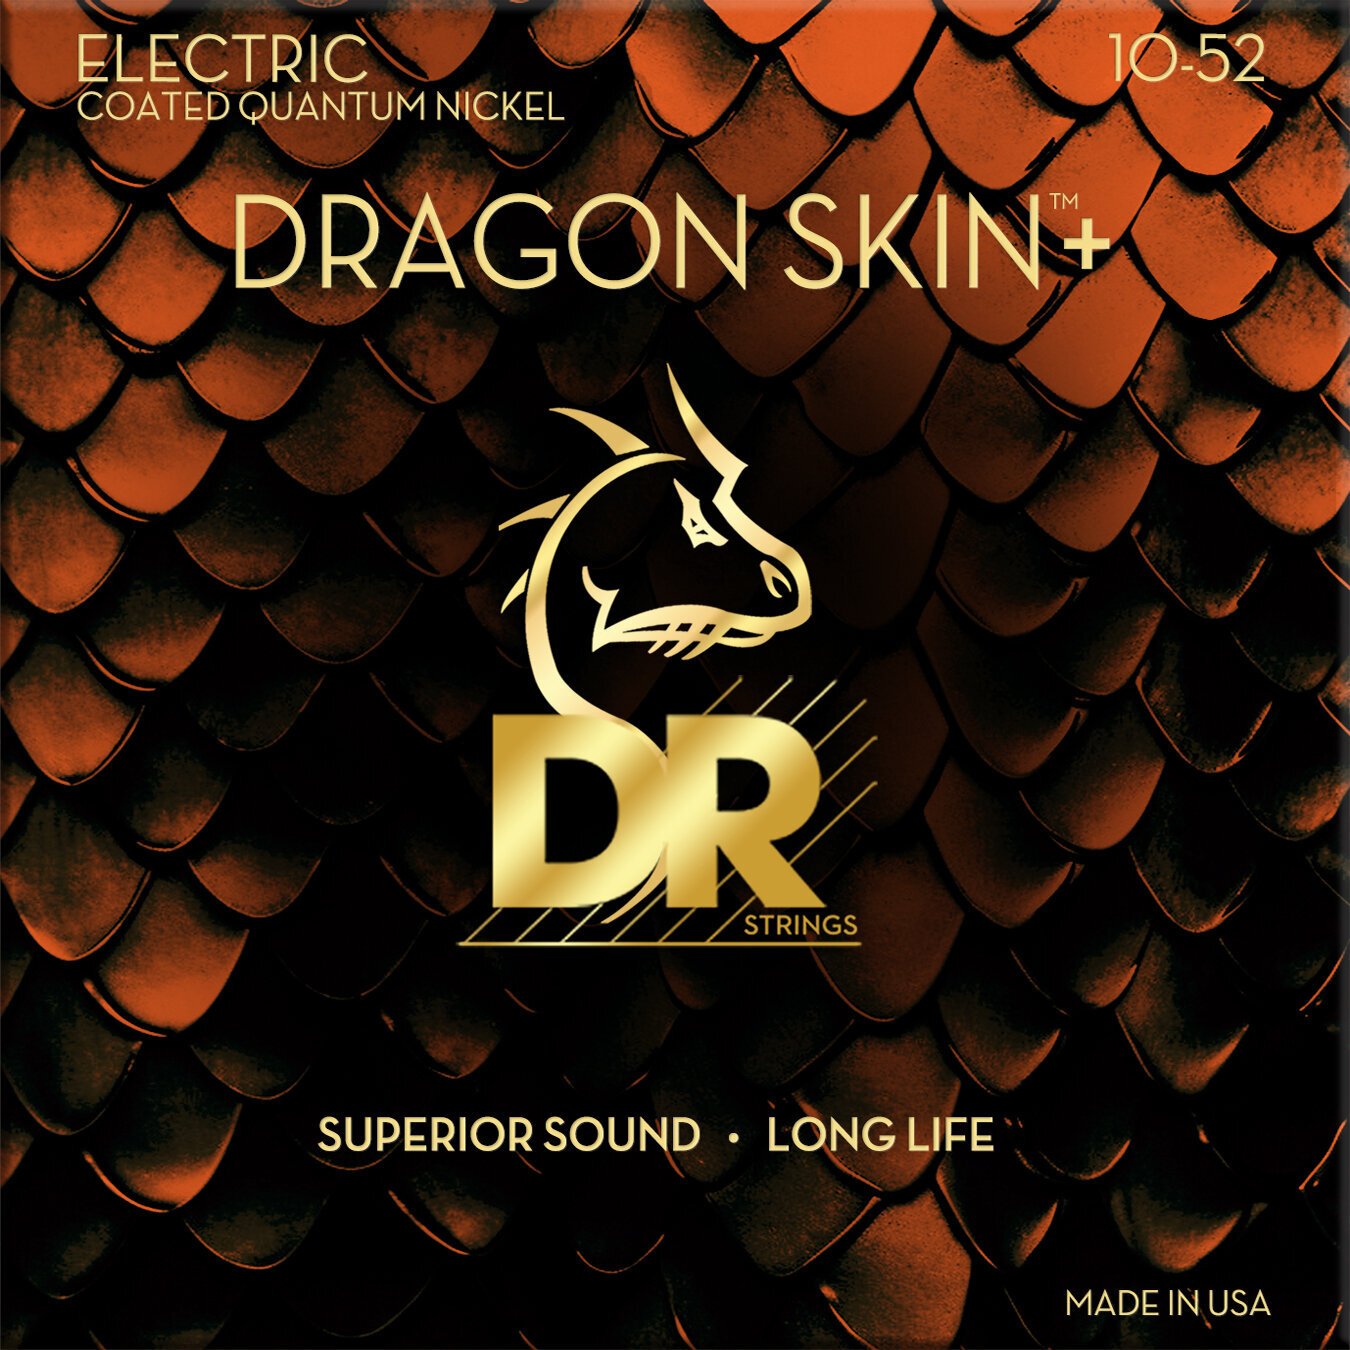 Cordas para guitarra elétrica Mi DR Strings Dragon Skin+ Coated Medium to Heavy 10-52